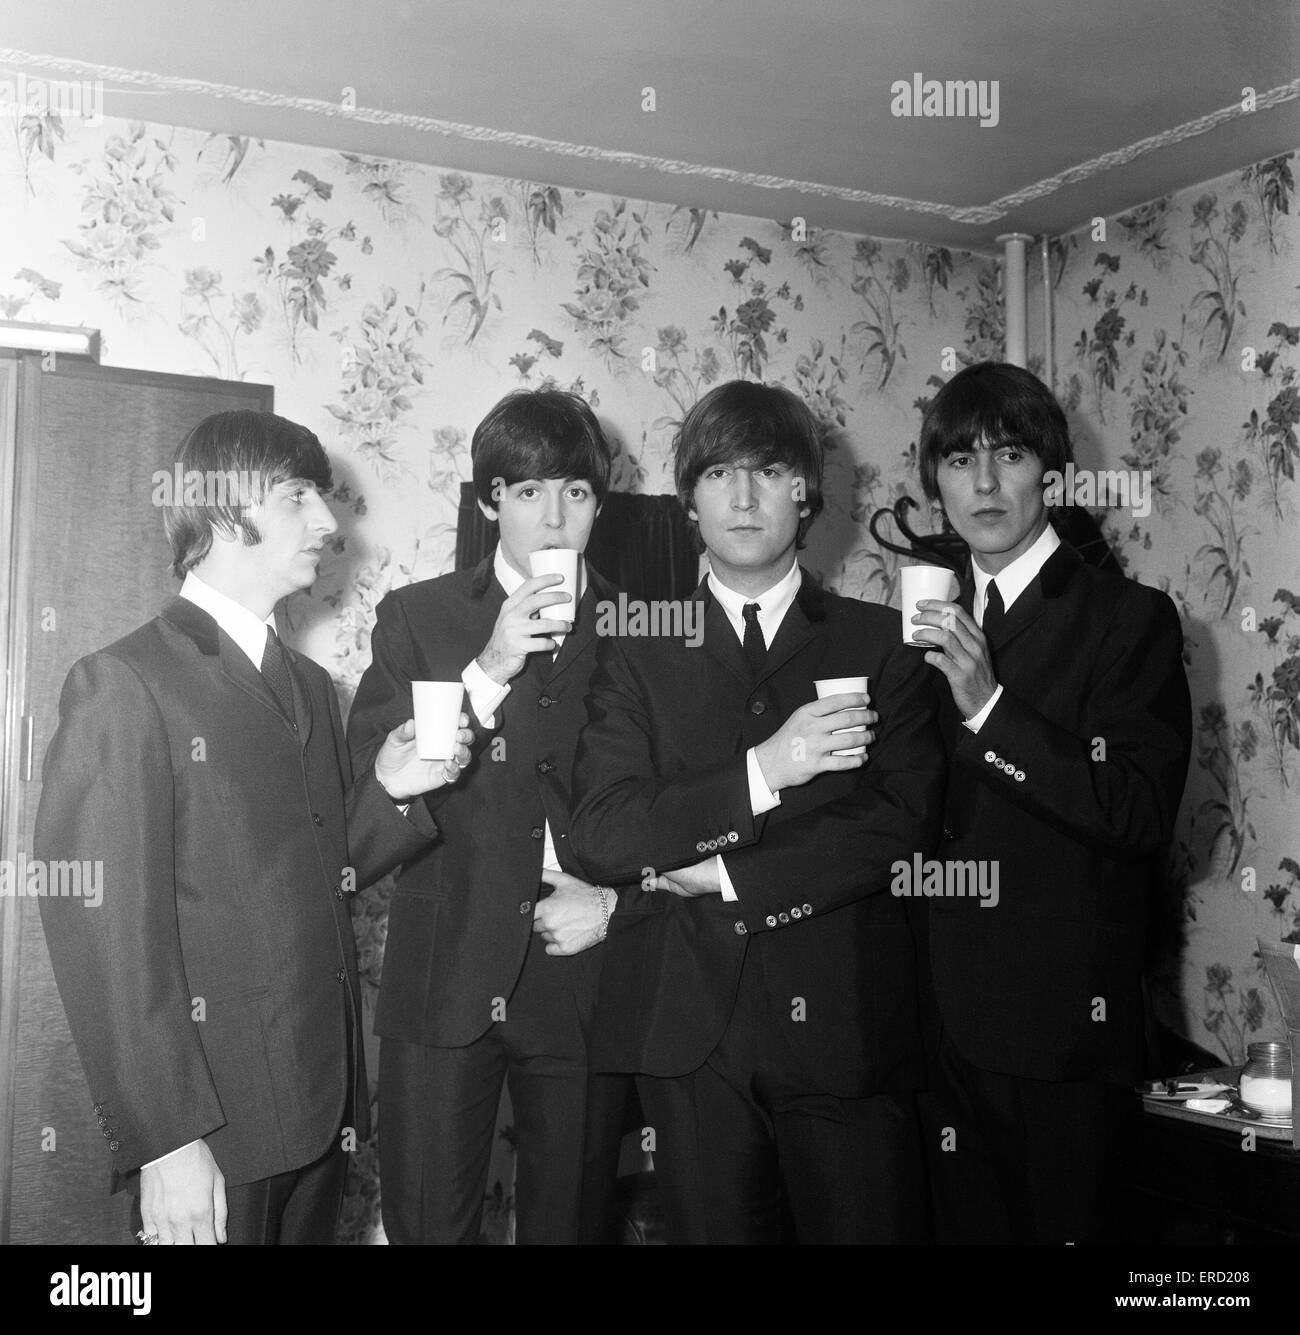 The Beatles in Birmingham for two Concerts at the Odeon, Birmingham, 1964 Autumn UK Tour, Sunday 11th October 1964. Ringo Starr, Paul McCartney, John Lennon, George Harrison. Stock Photo